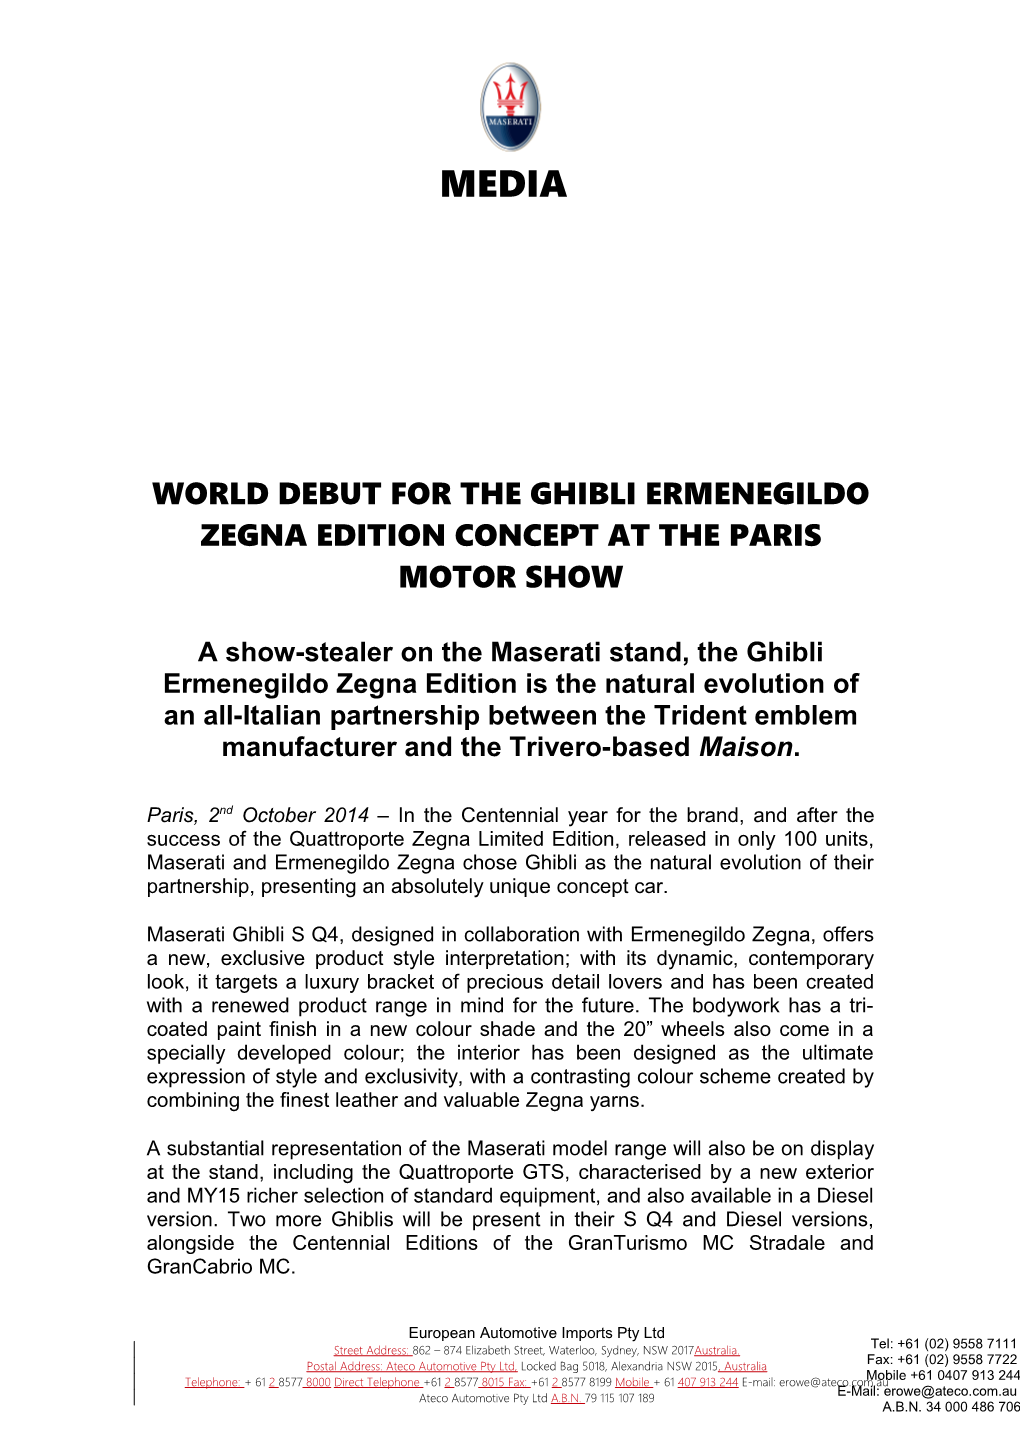 World Debut for the Ghibli Ermenegildo Zegna Edition Concept at the Paris Motor Show